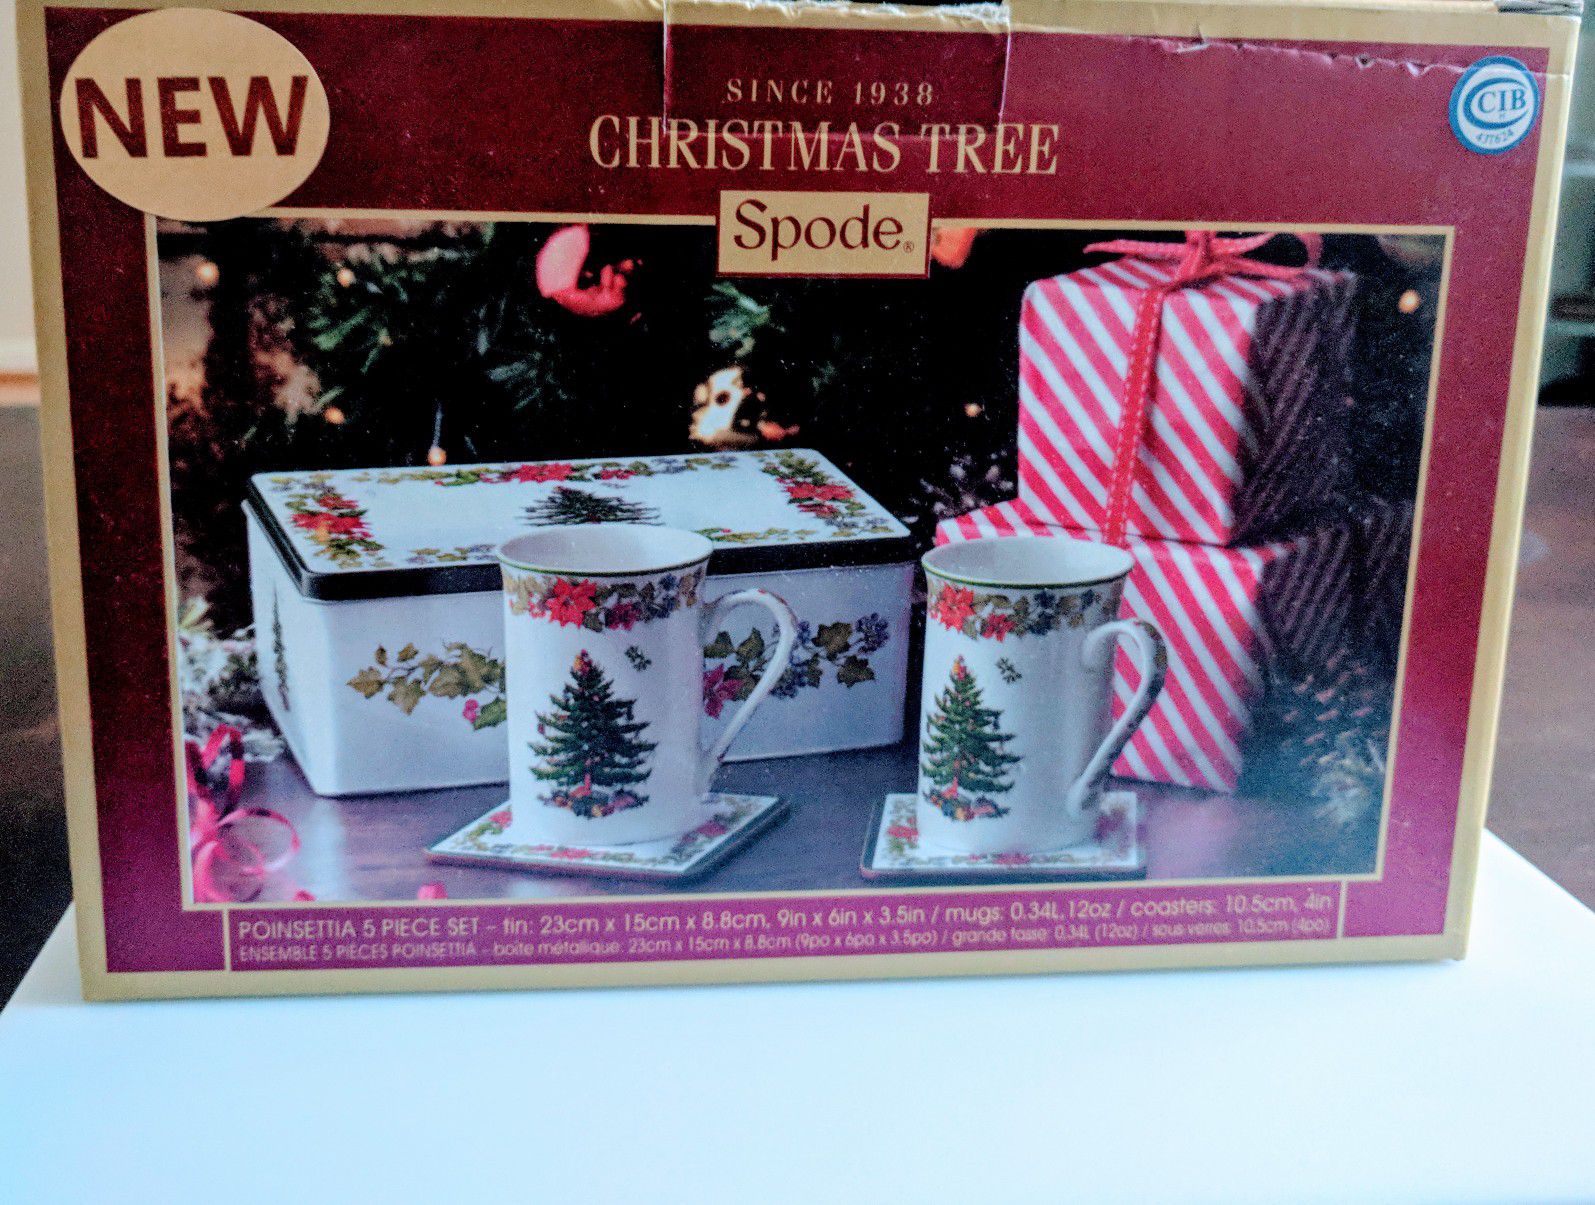 NEW Spode Christmas Tree Poinsettia Ceramic 5-piece Gift Set Holiday Favorites